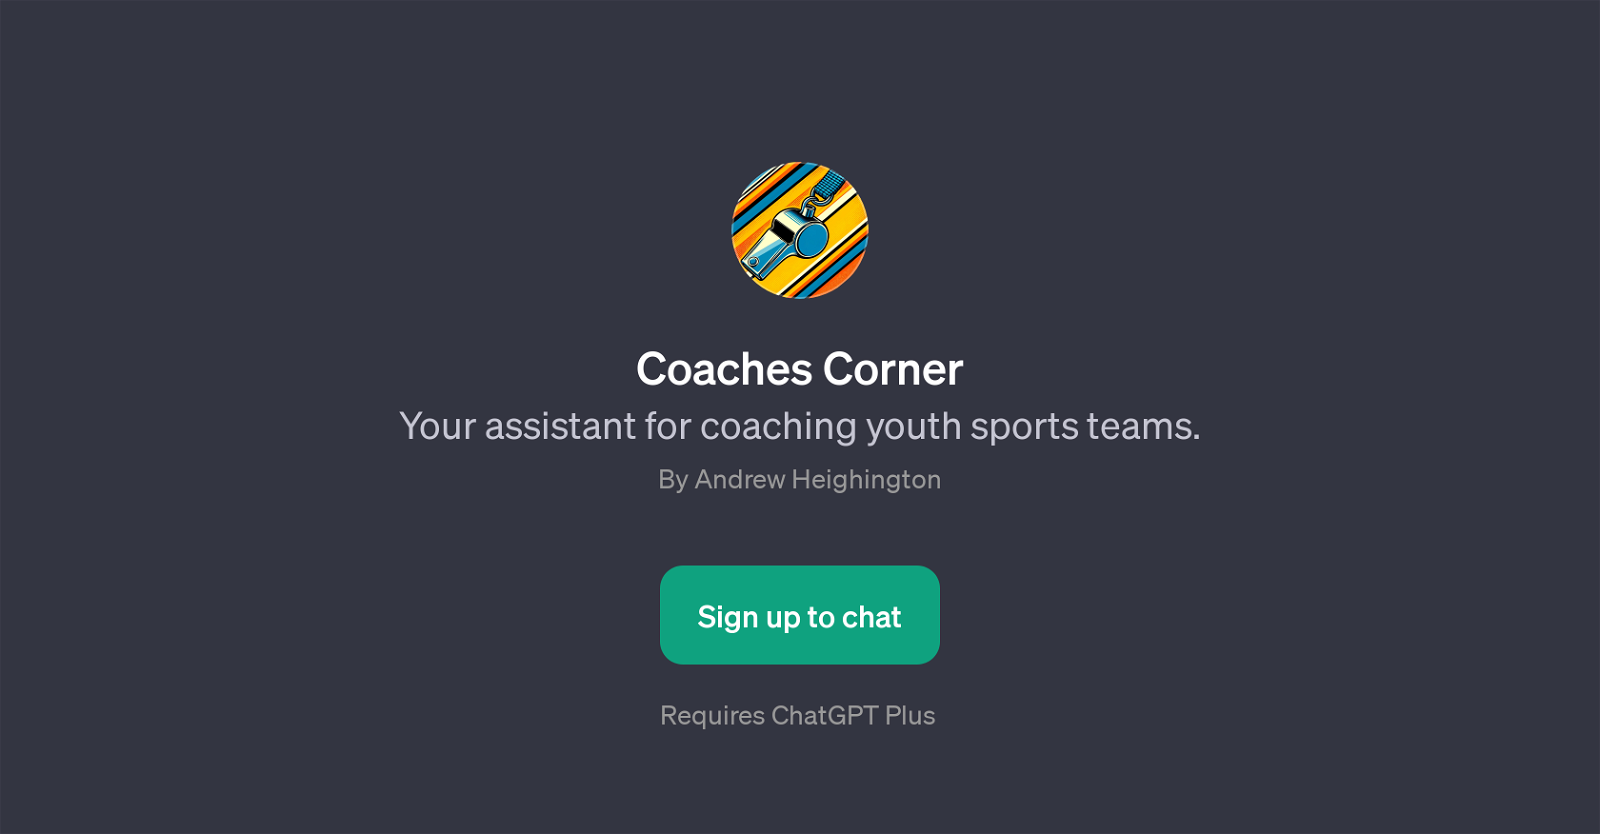 Coaches Corner website